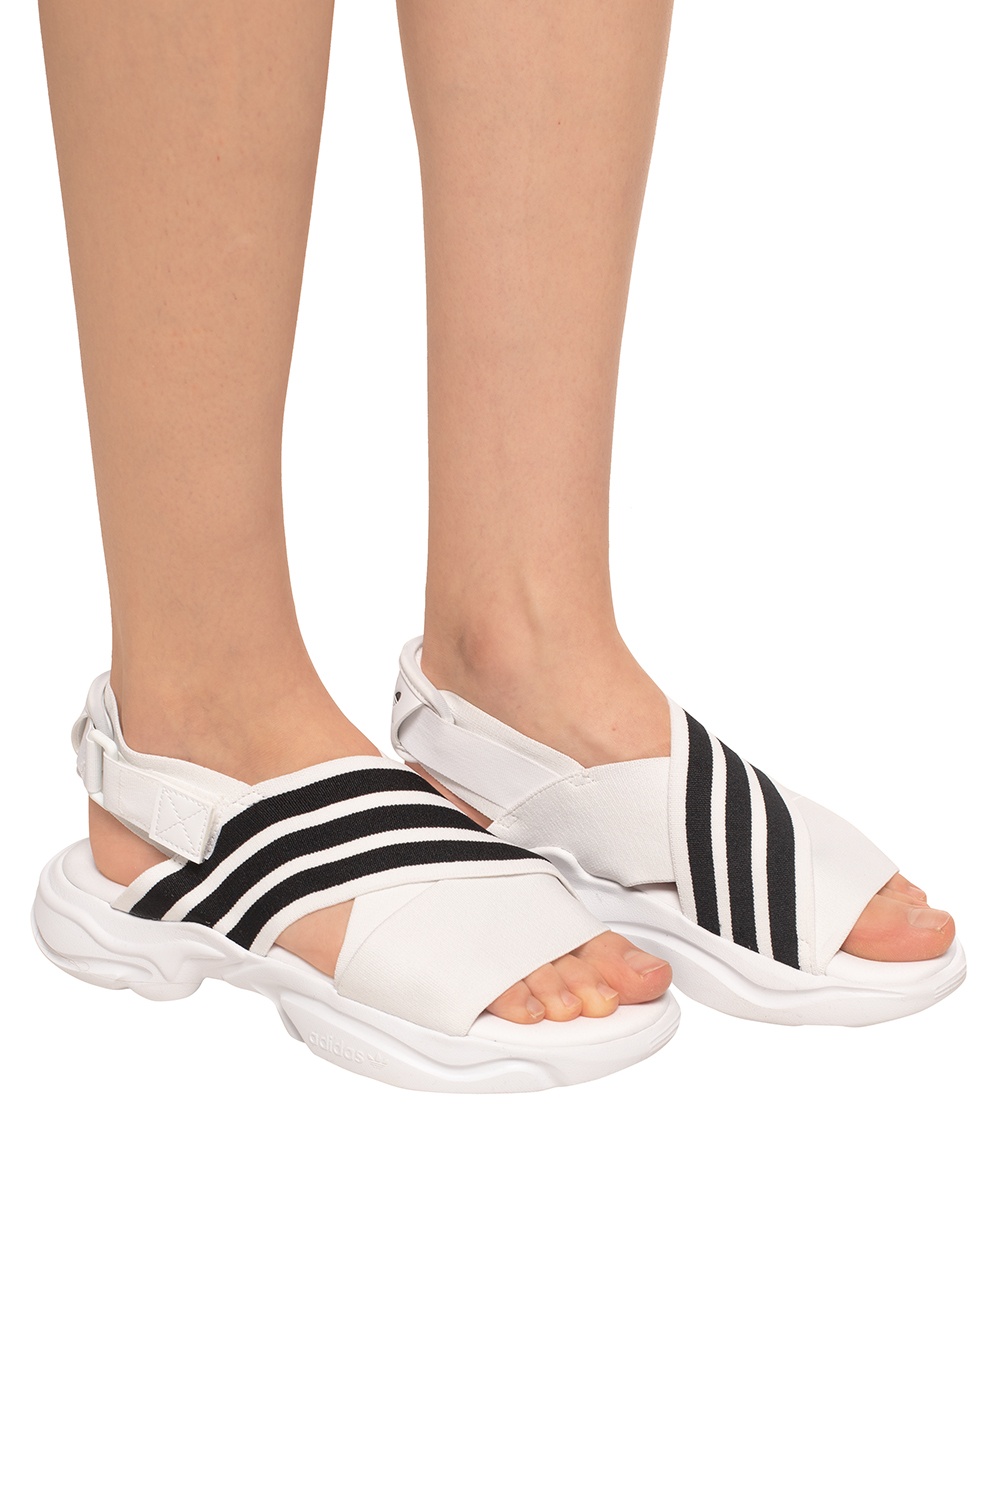 adidas sandals magmur